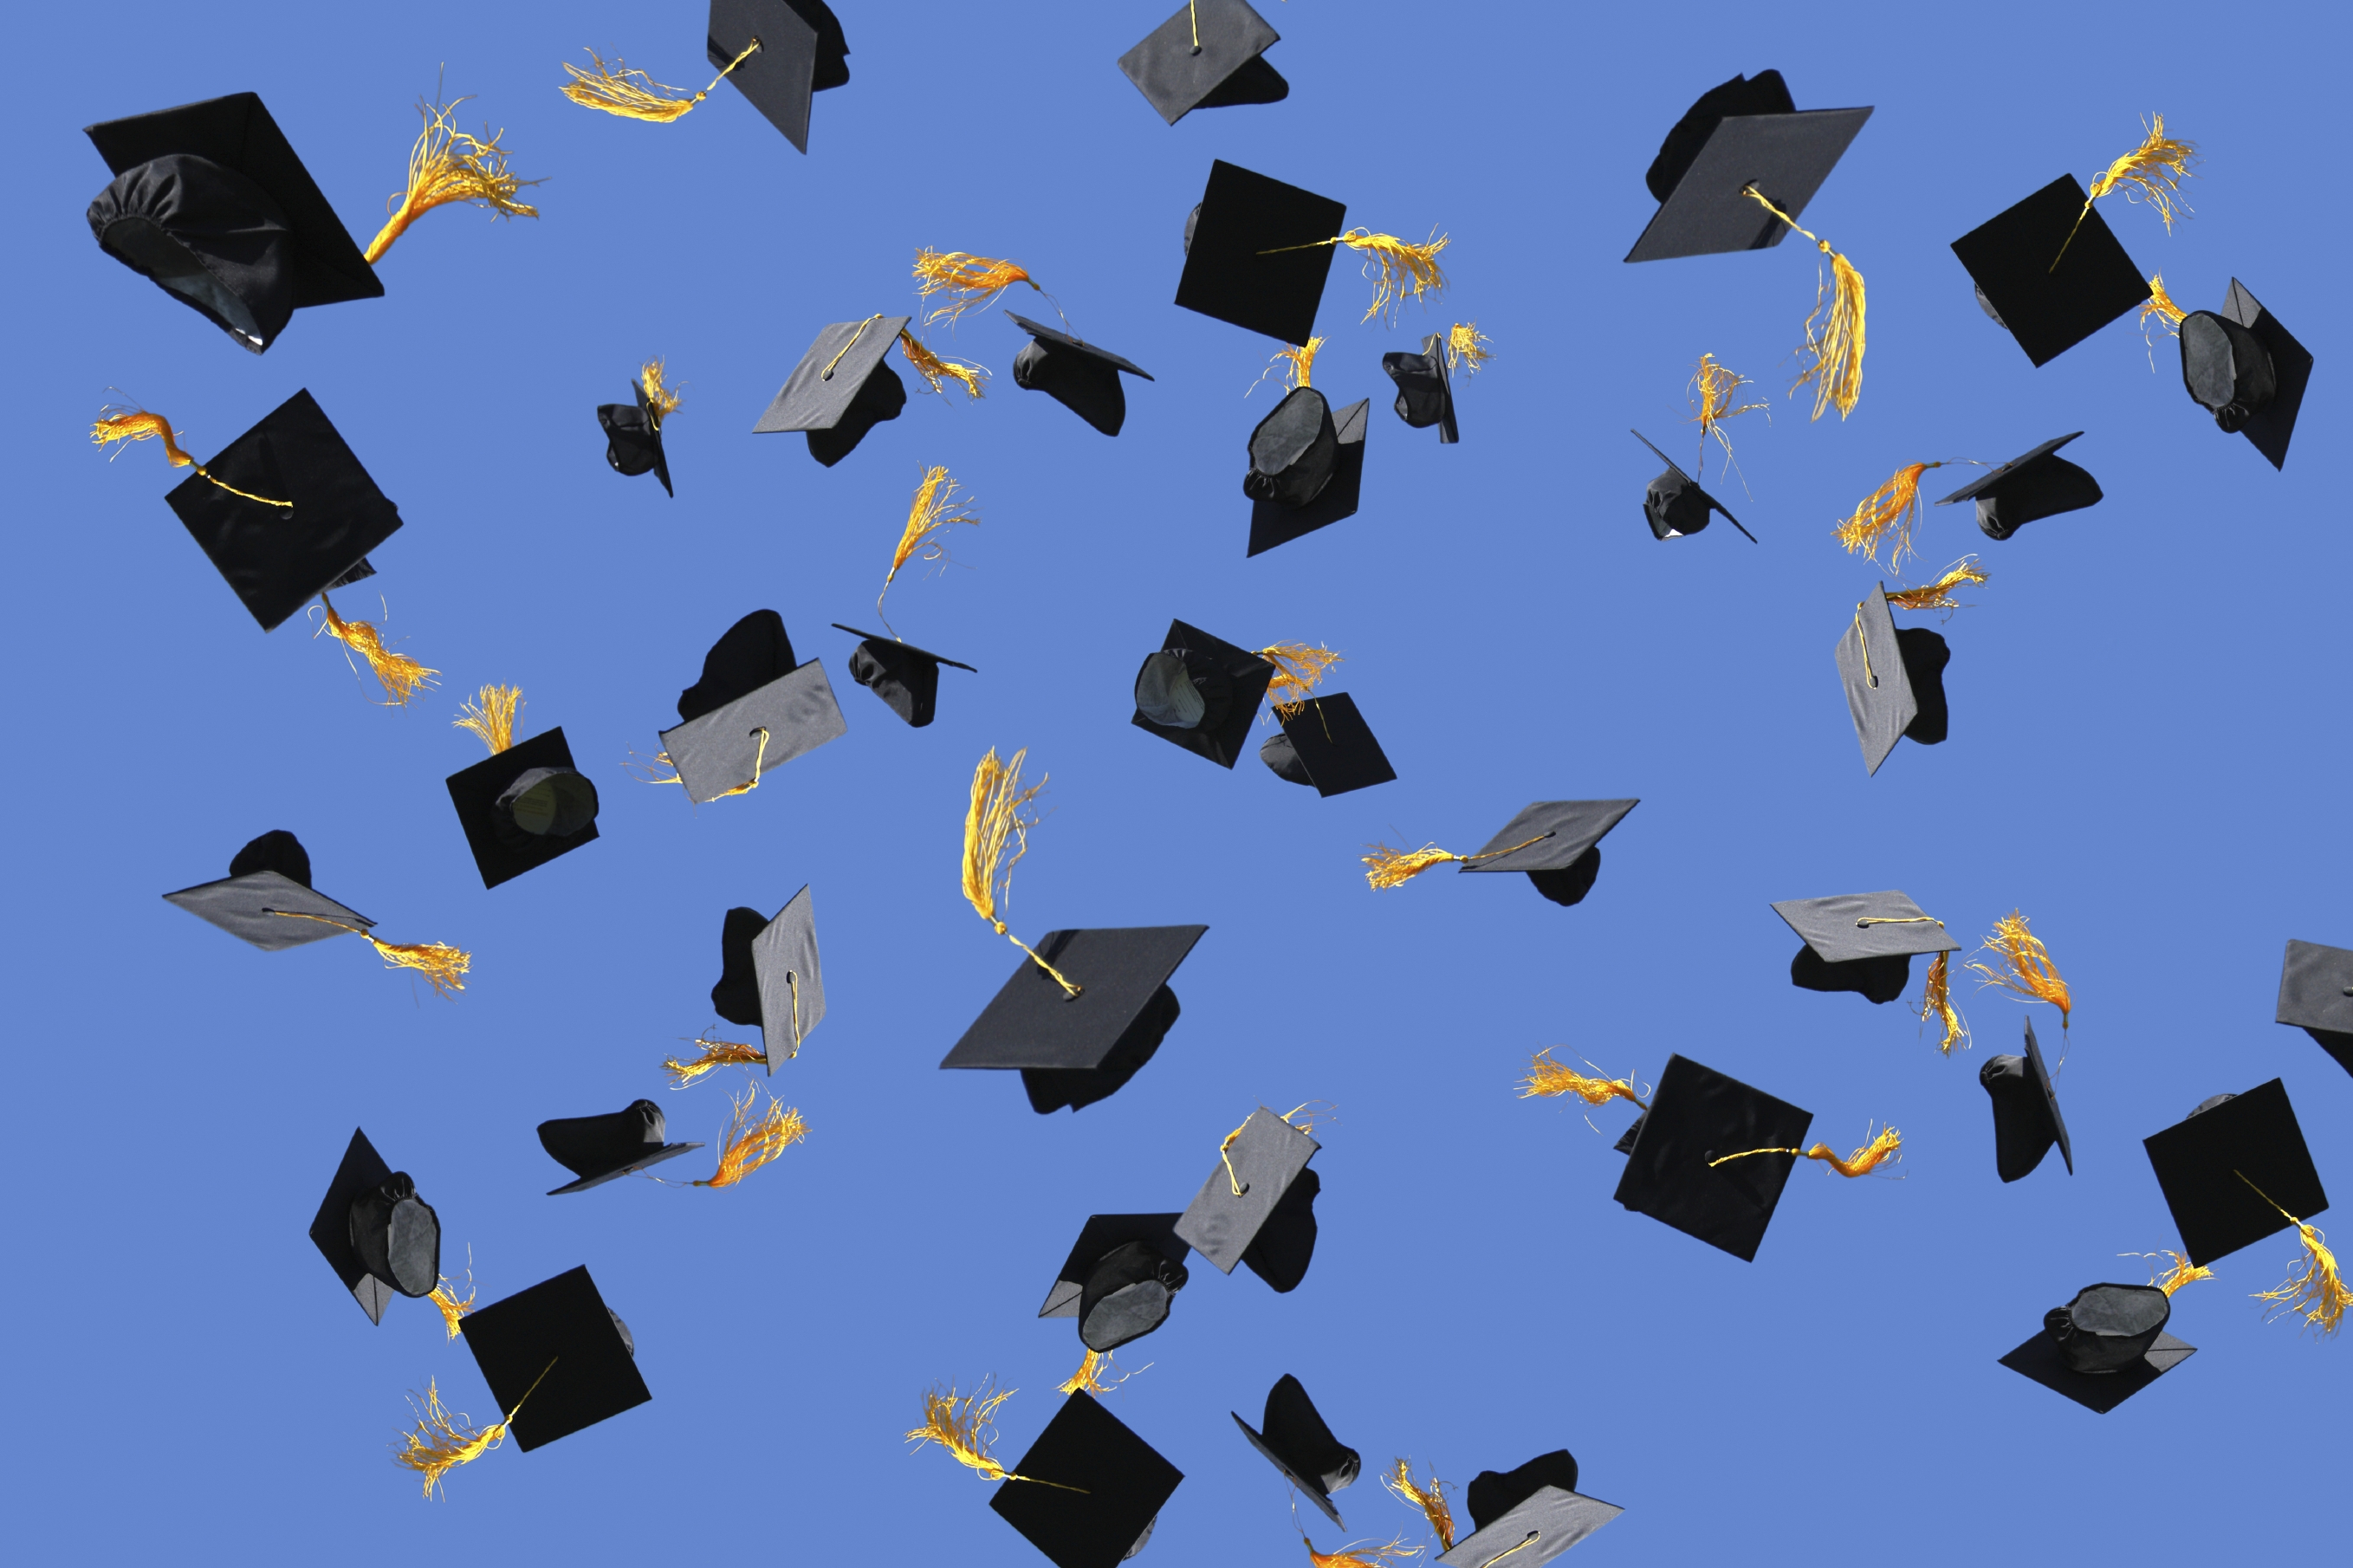 graduation-cap-seamless-pattern-graphic-by-manuchi-creative-fabrica